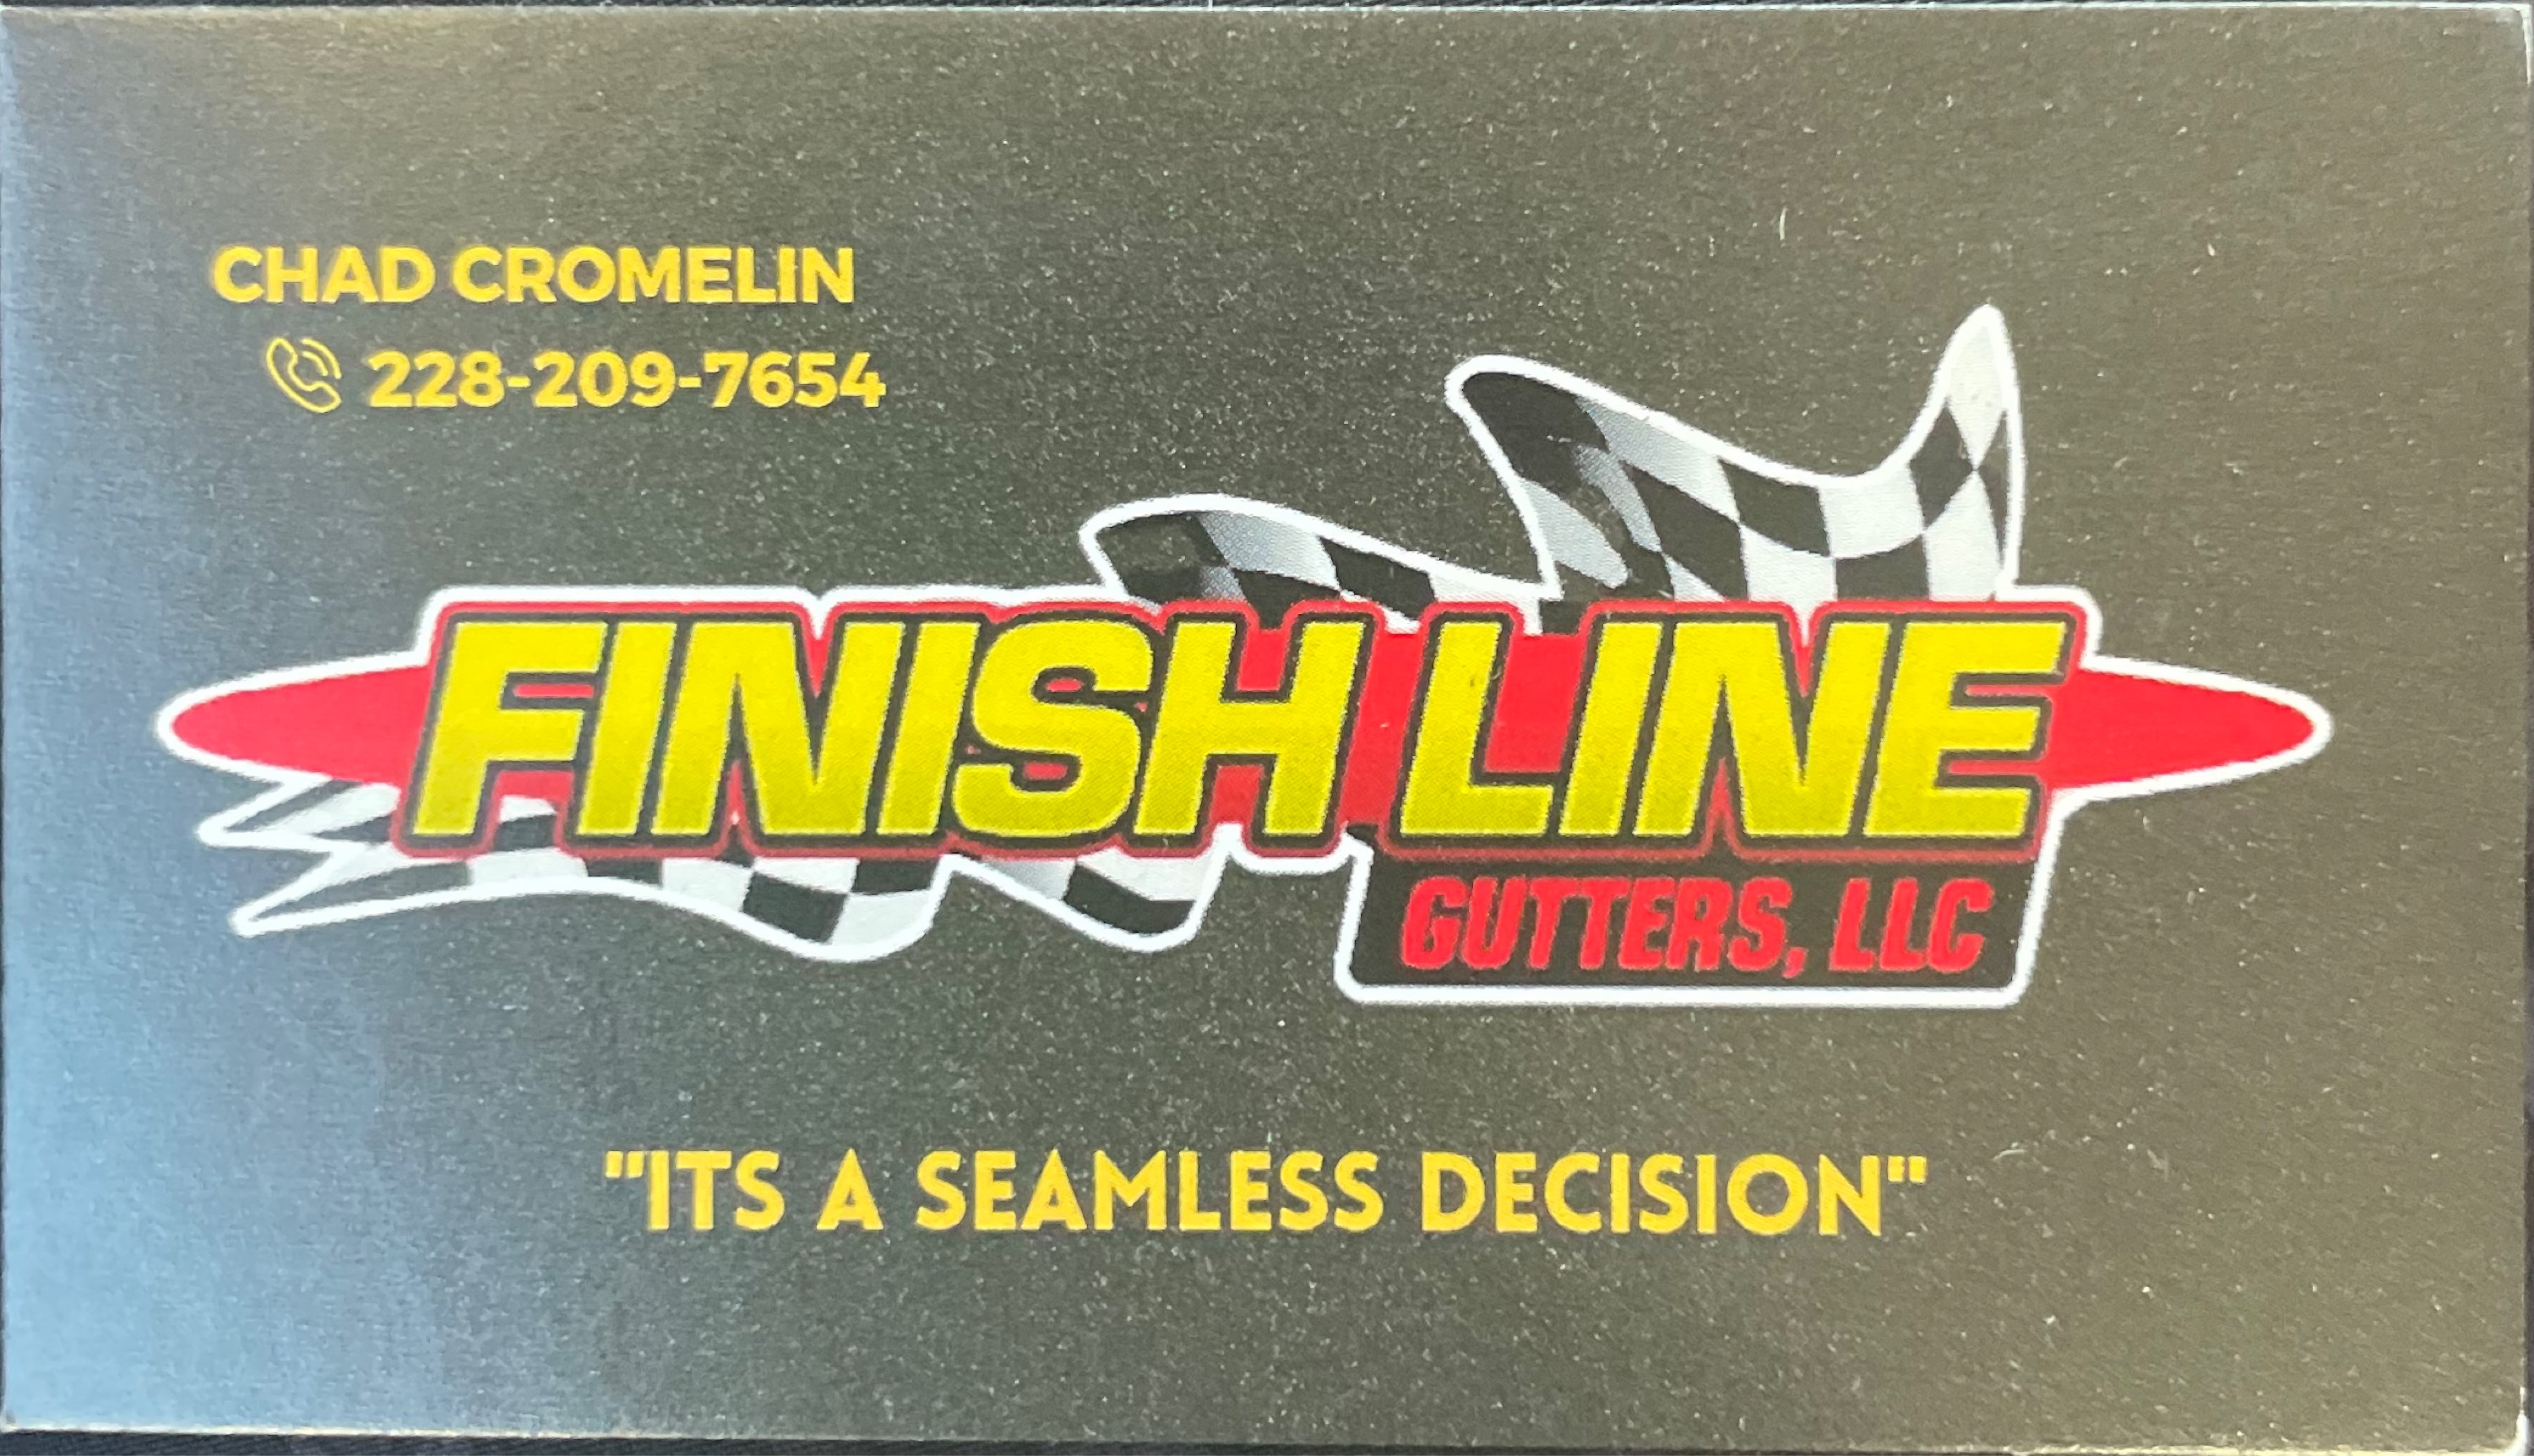 Finish Line Gutters Logo